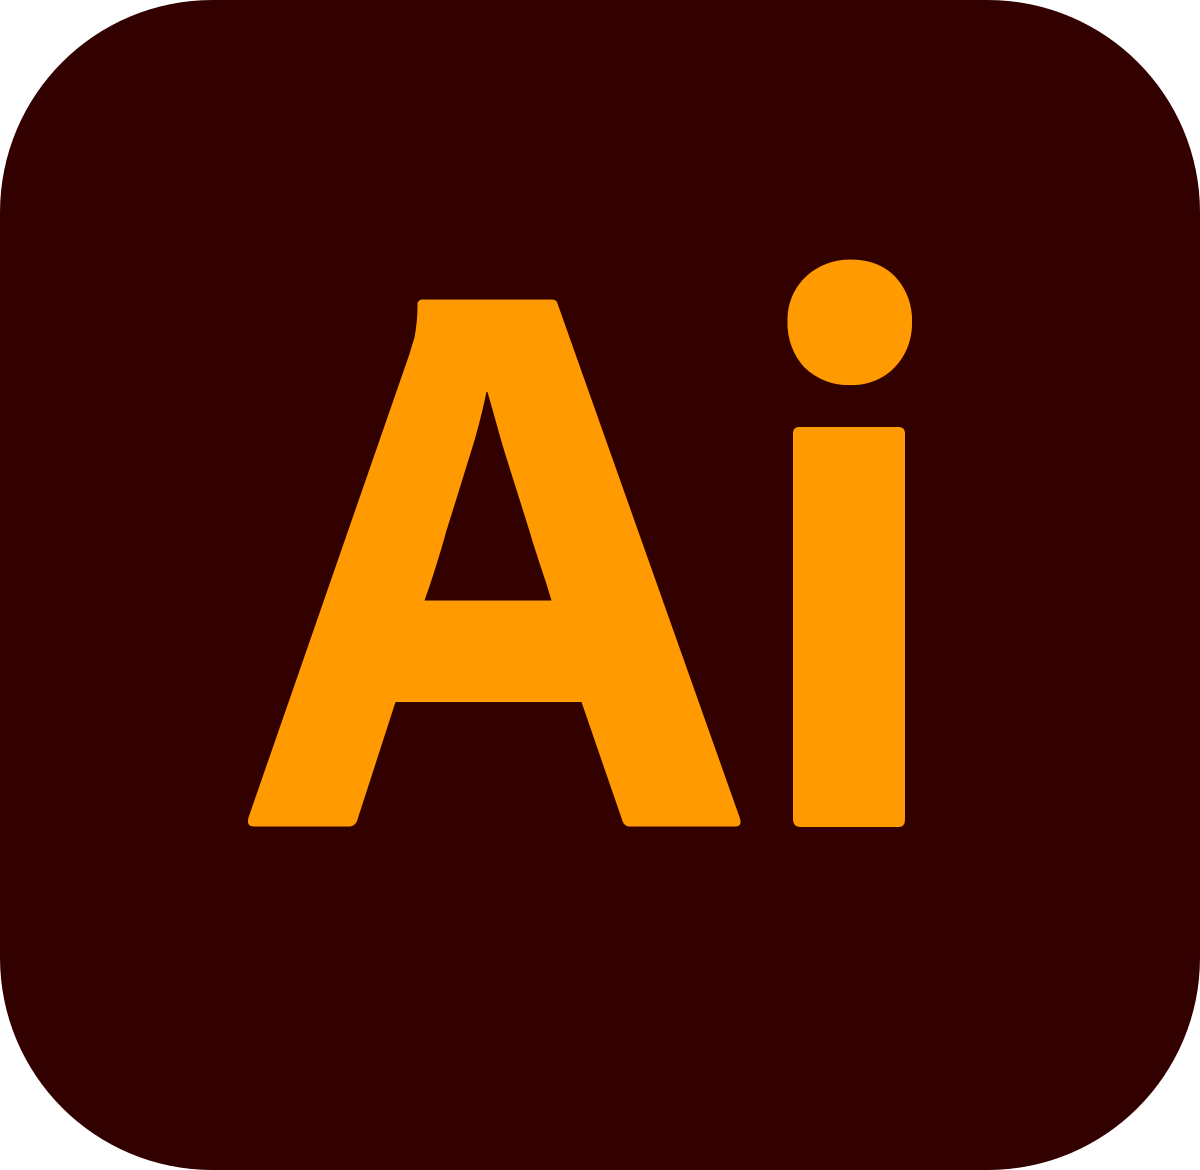 Adobe Illustrator - GIMP Online Alternatives